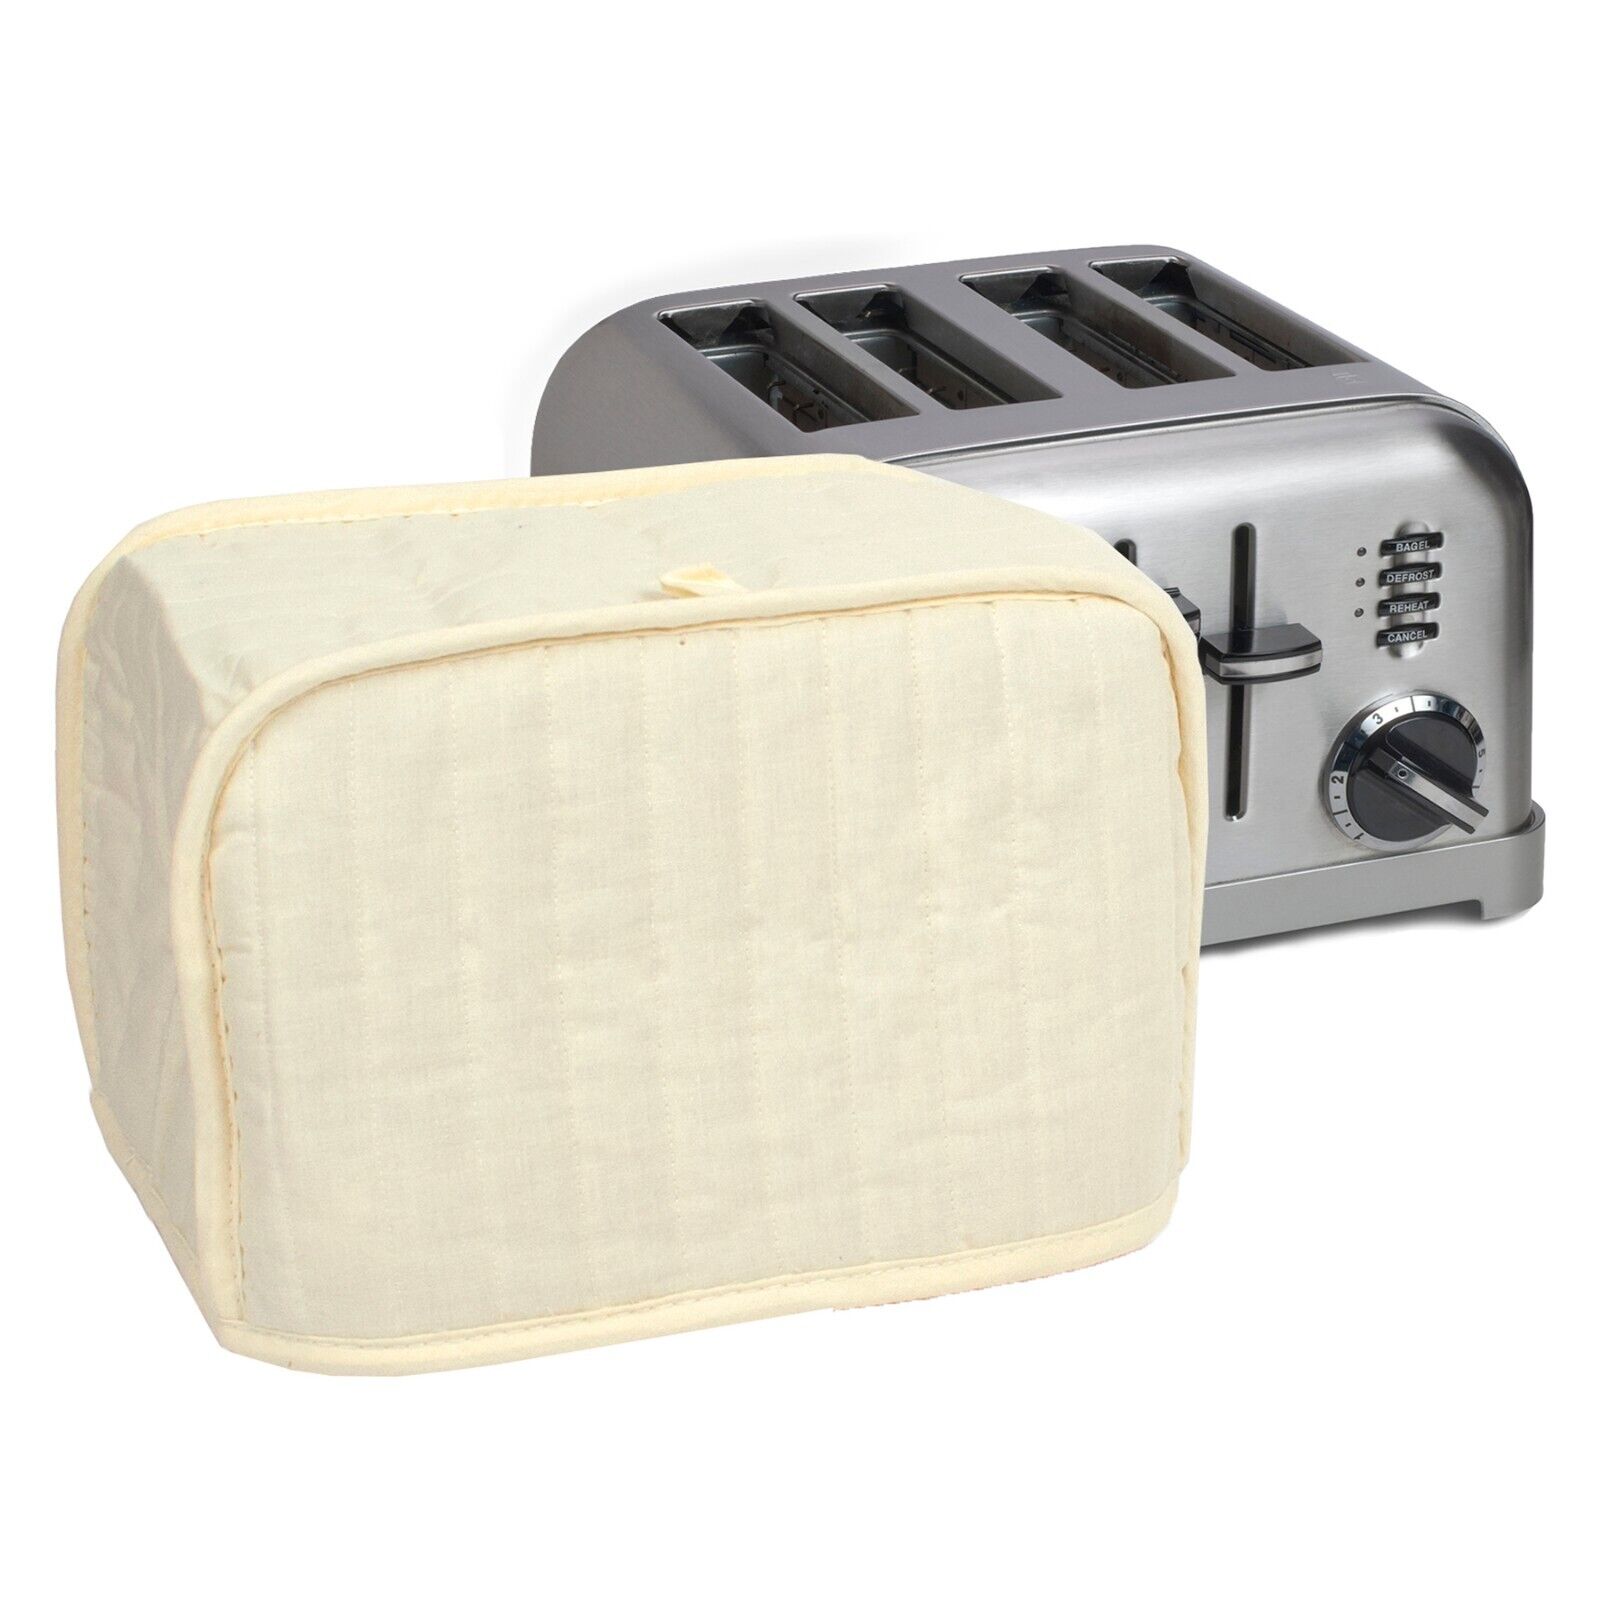 RITZ Four-Slice Toaster Kitchen Appliance Cover